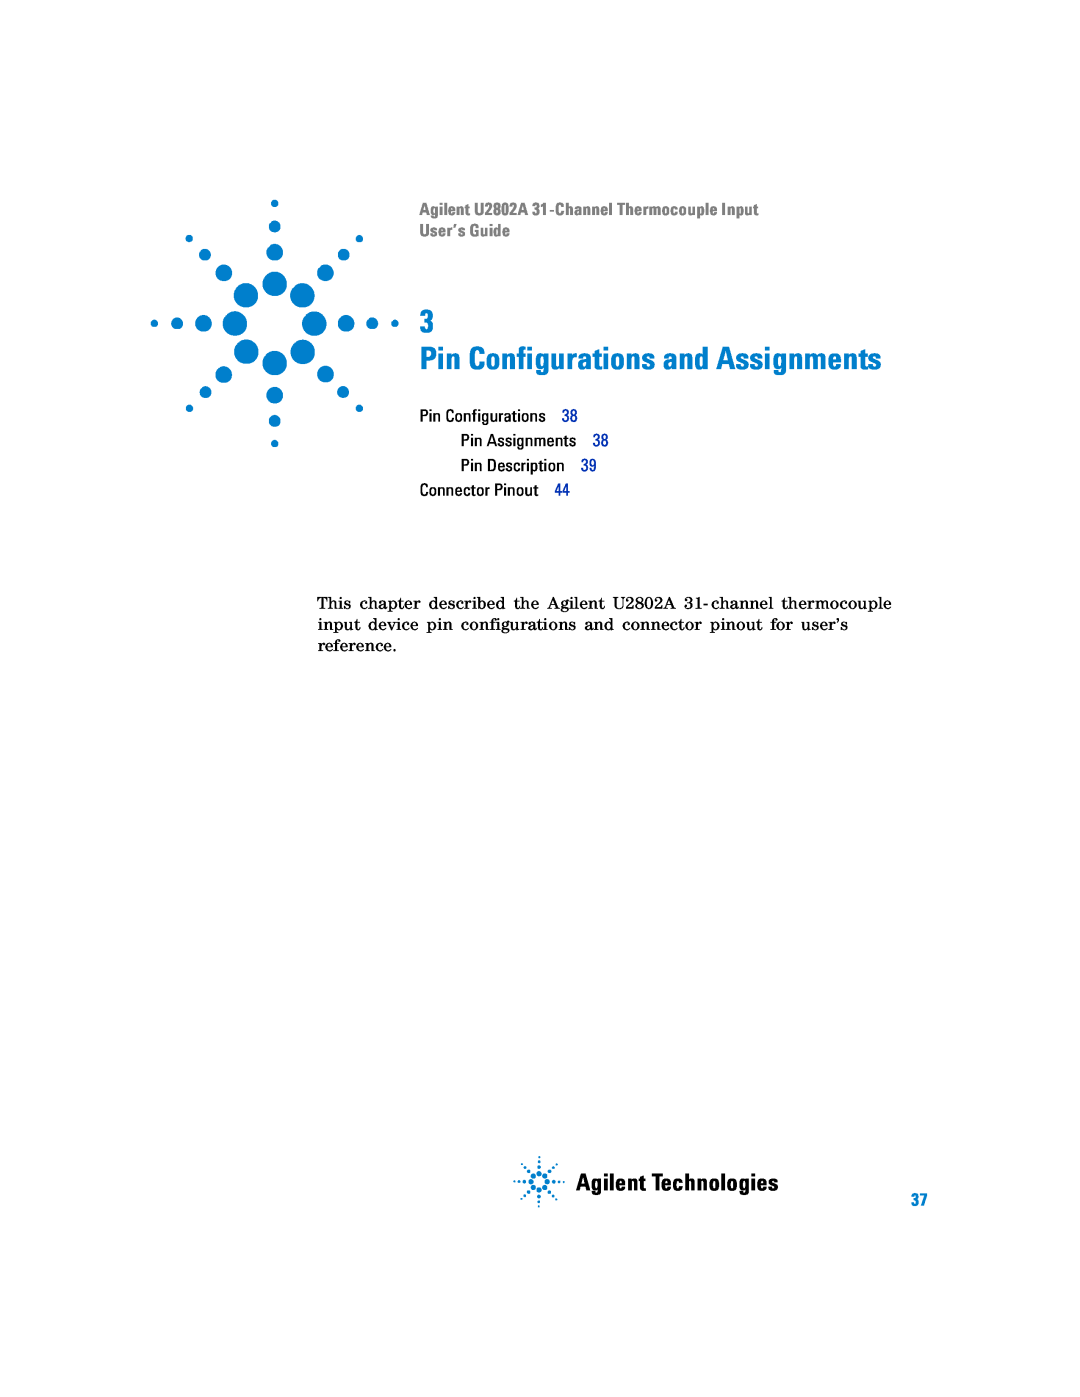 Agilent Technologies U2802A manual Pin Configurations and Assignments, Agilent Technologies, User’s Guide 